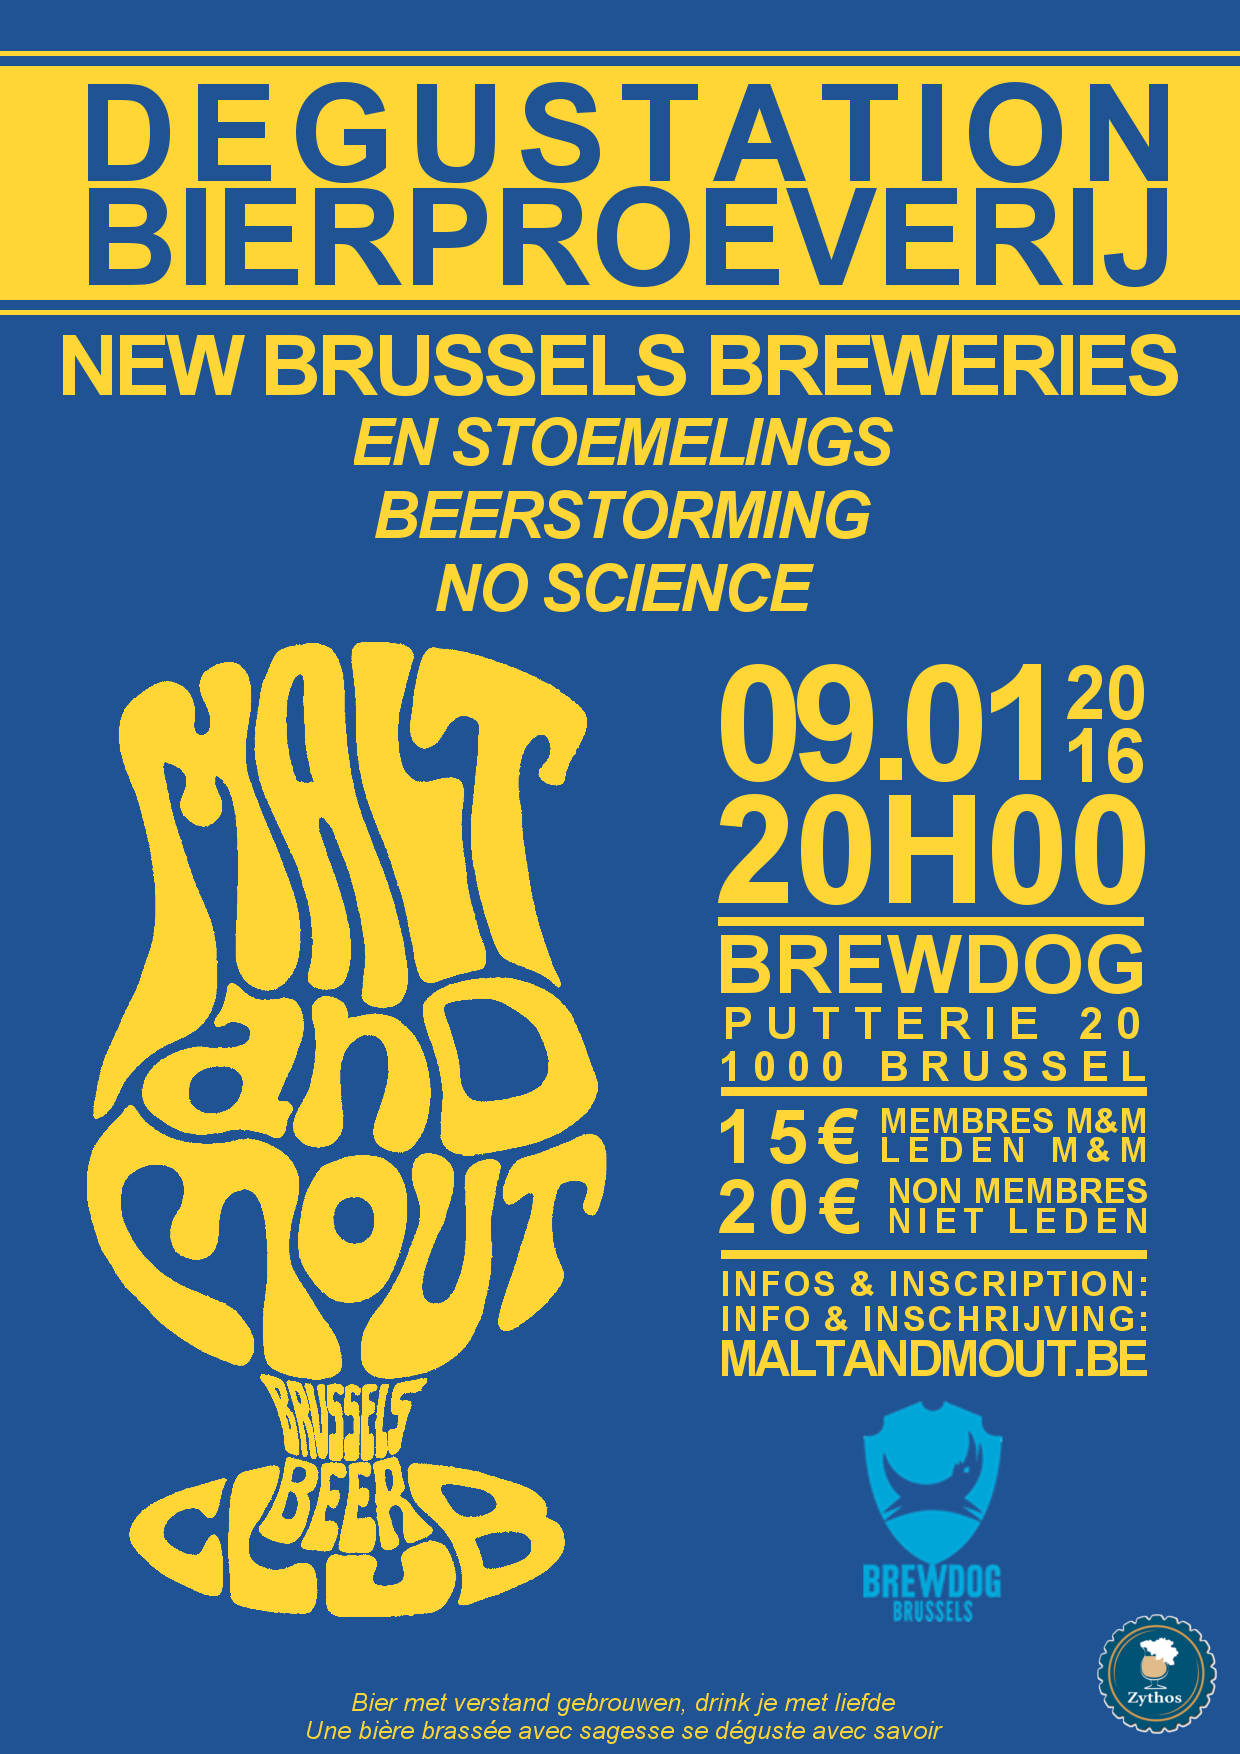 New Brussels Breweries